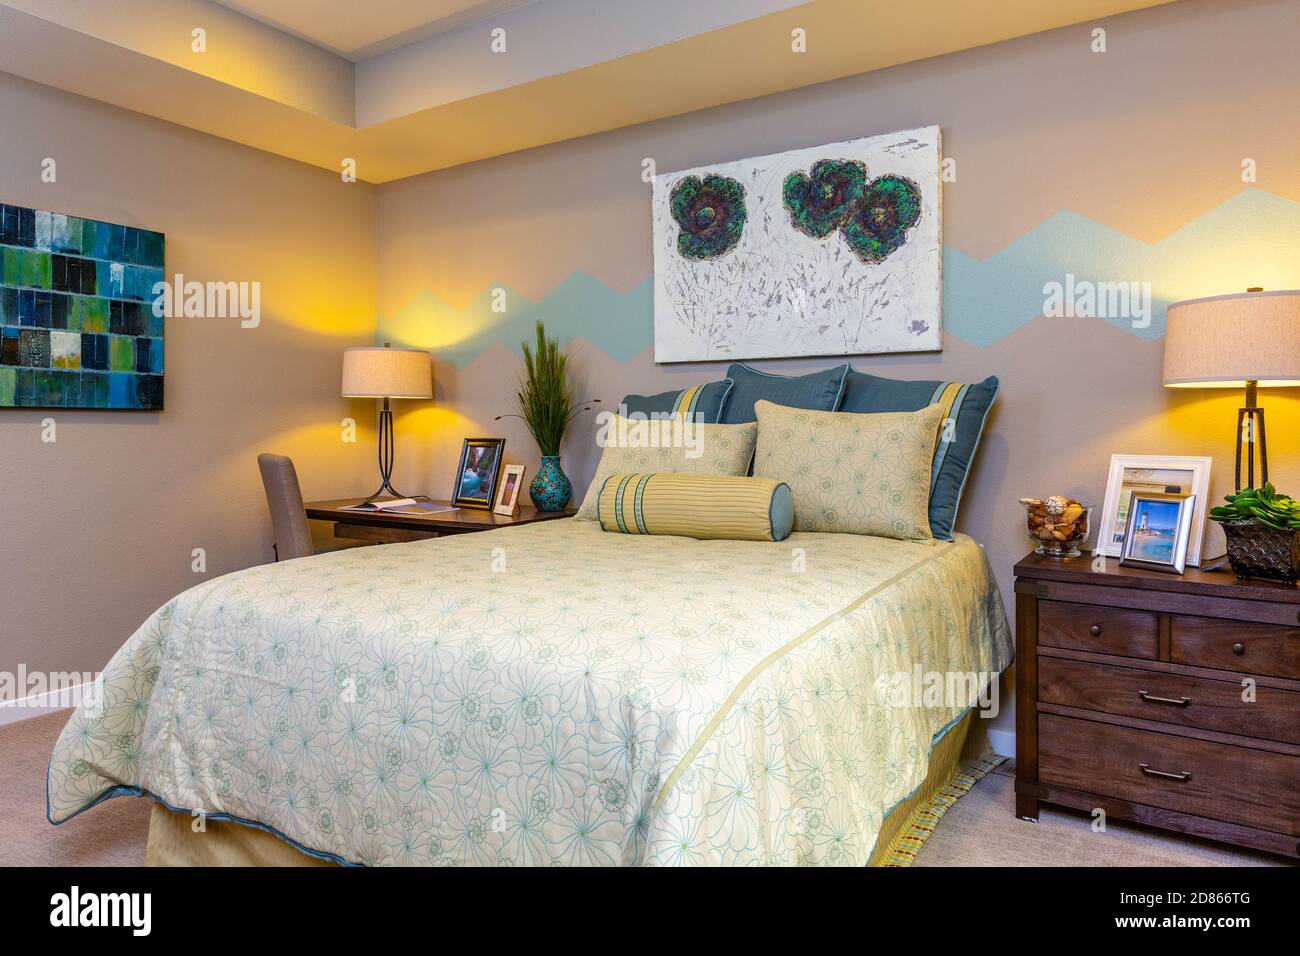 Schlafzimmer, Dorfhäuser Modell zu Hause, Arvada, Colorado USA Stockfoto